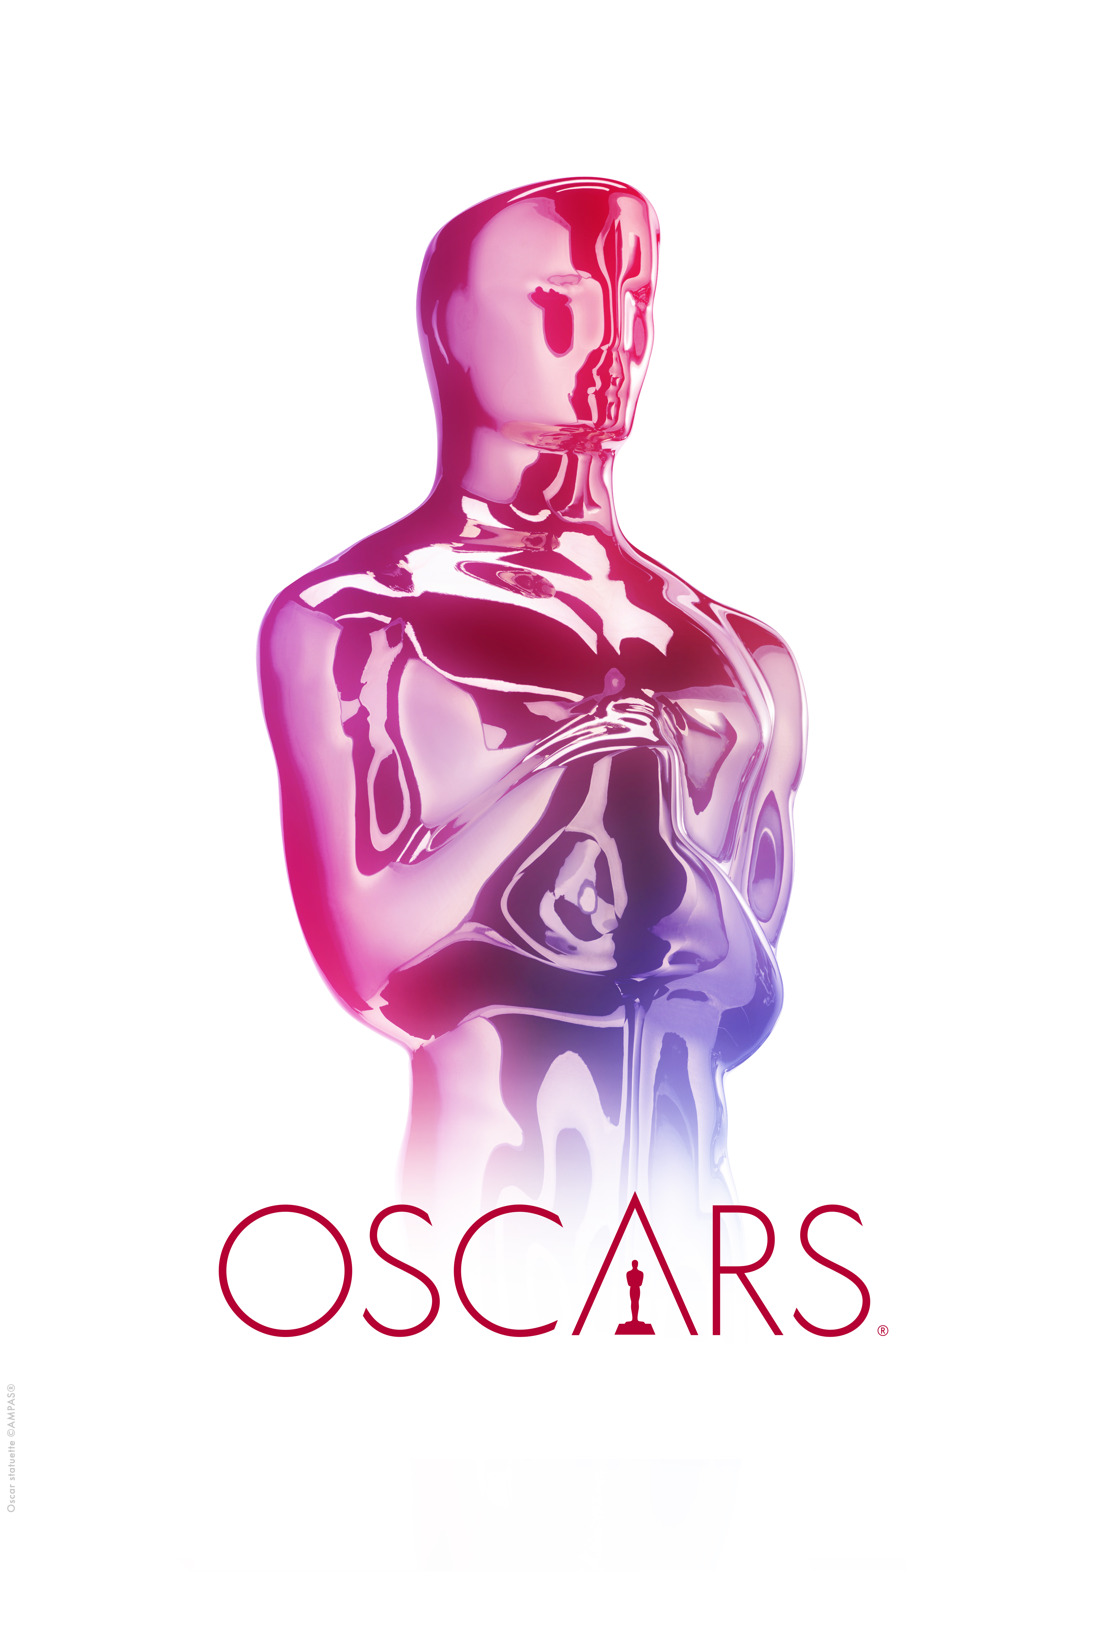 ZES telt vanaf morgen af naar de OSCARS© met 9 Oscarwinnende films